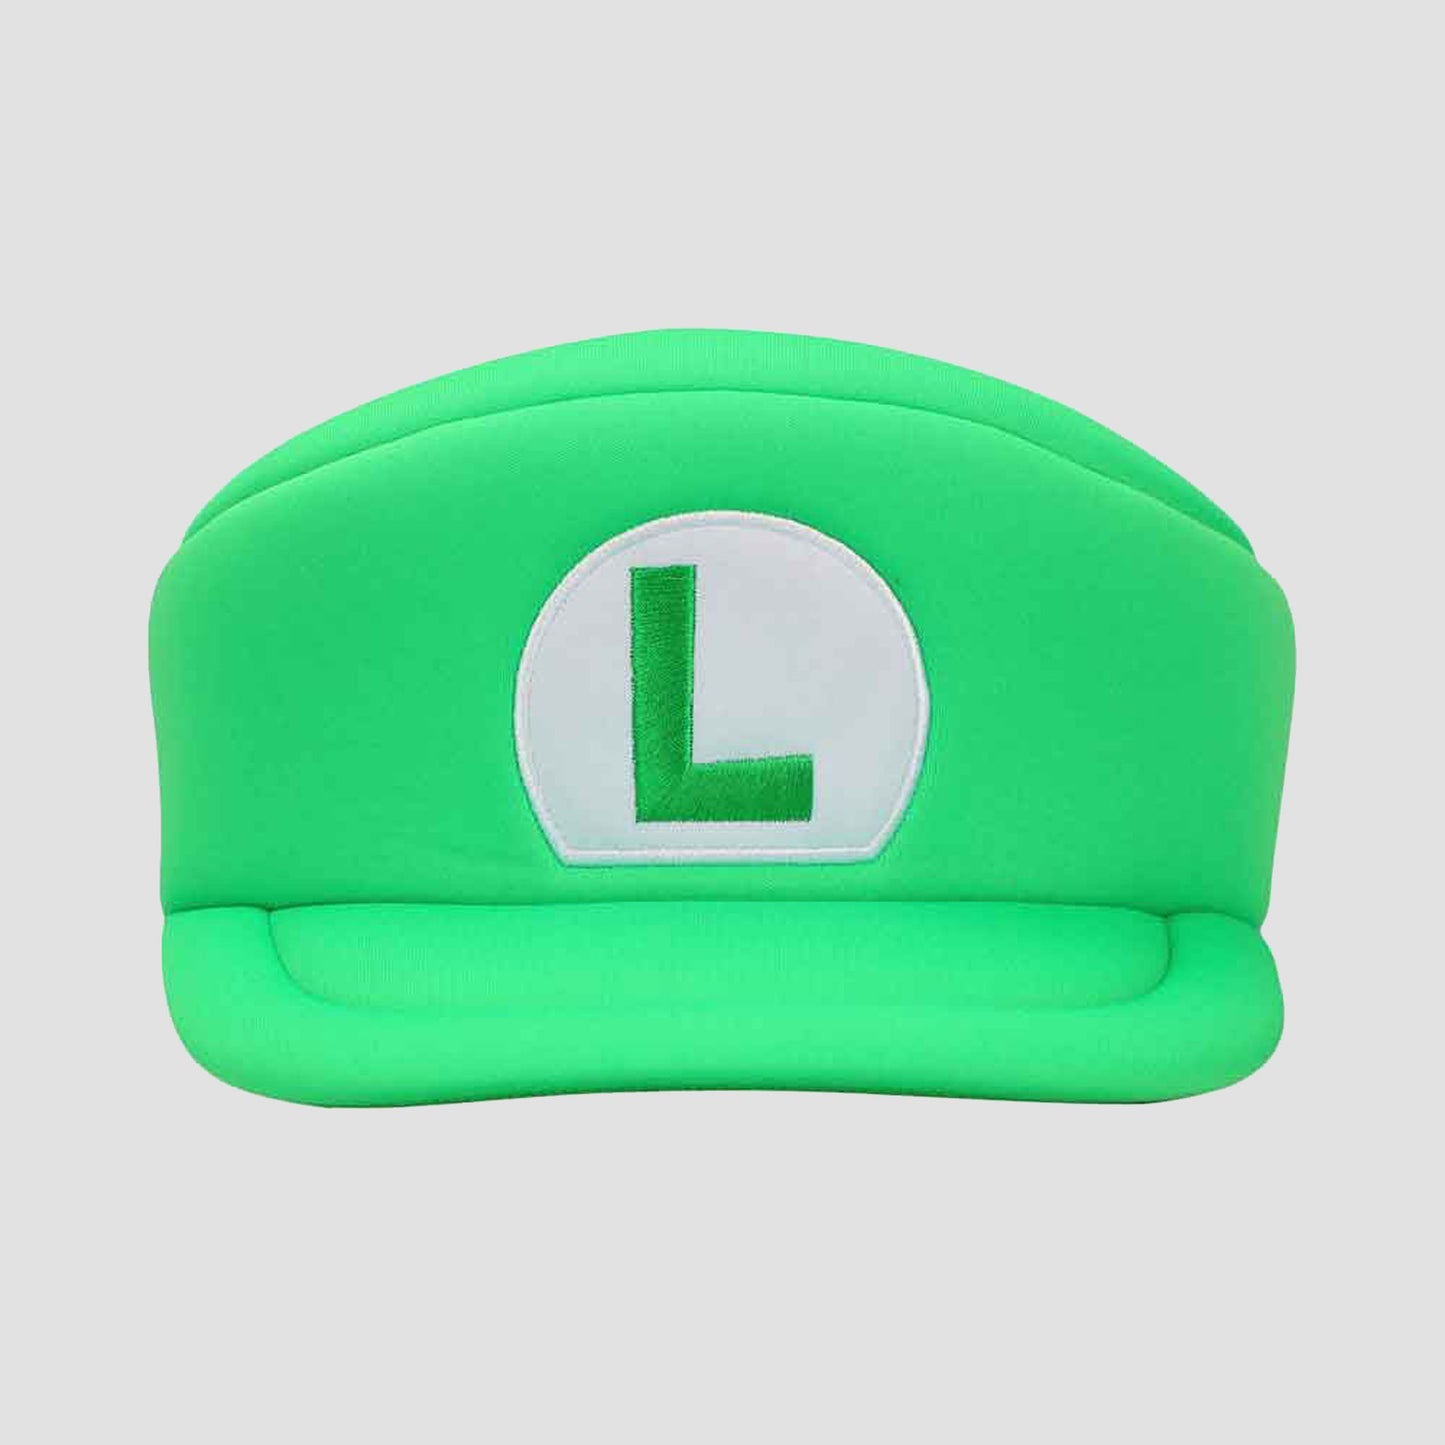 Luigi (Super Mario Bros) Cosplay Hat